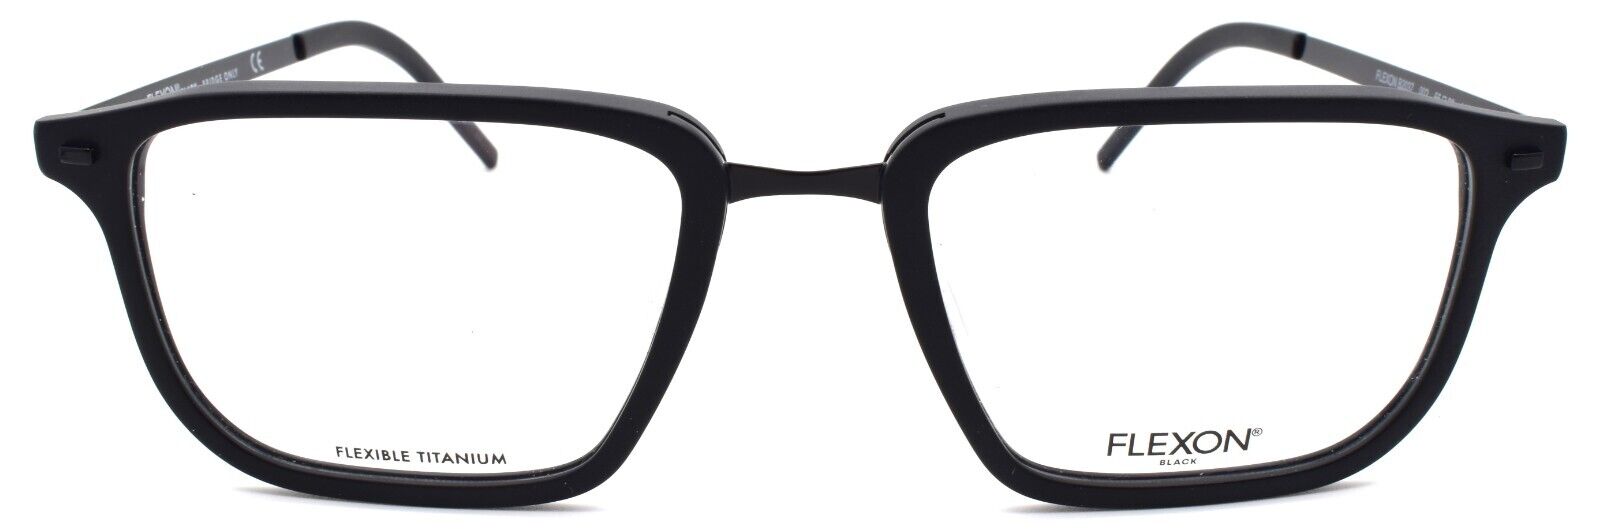 2-Flexon B2037 002 Men's Eyeglasses 55-22-145 Matte Black-886895562195-IKSpecs